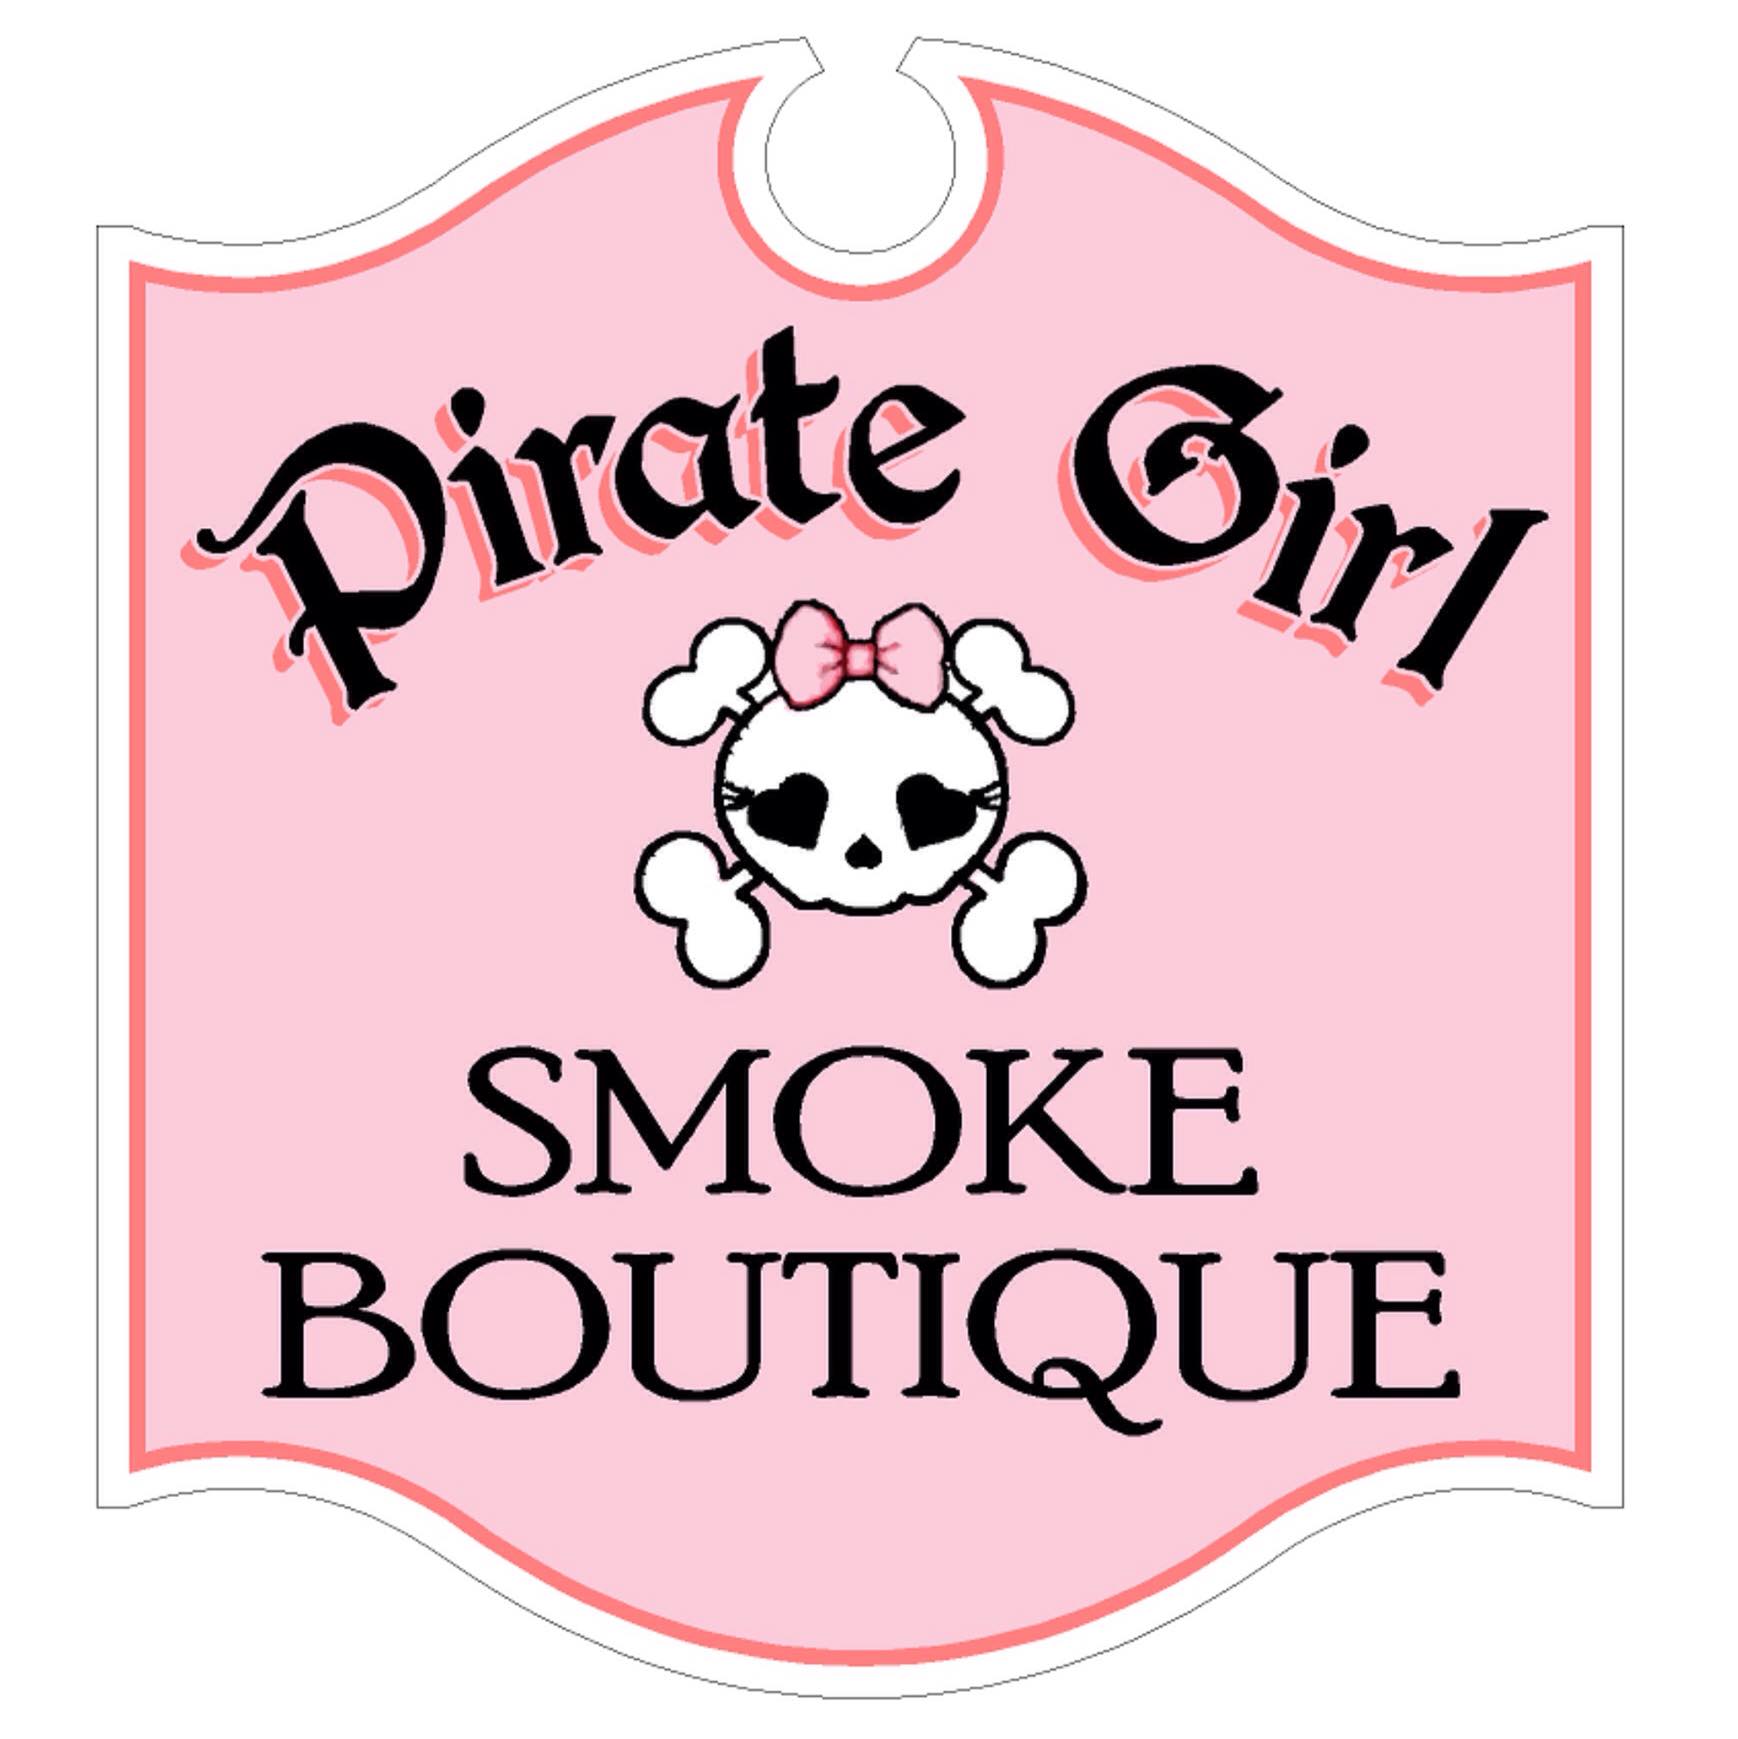 Rolling Tray Smoke Station – Pirate Girl Smoke Boutique